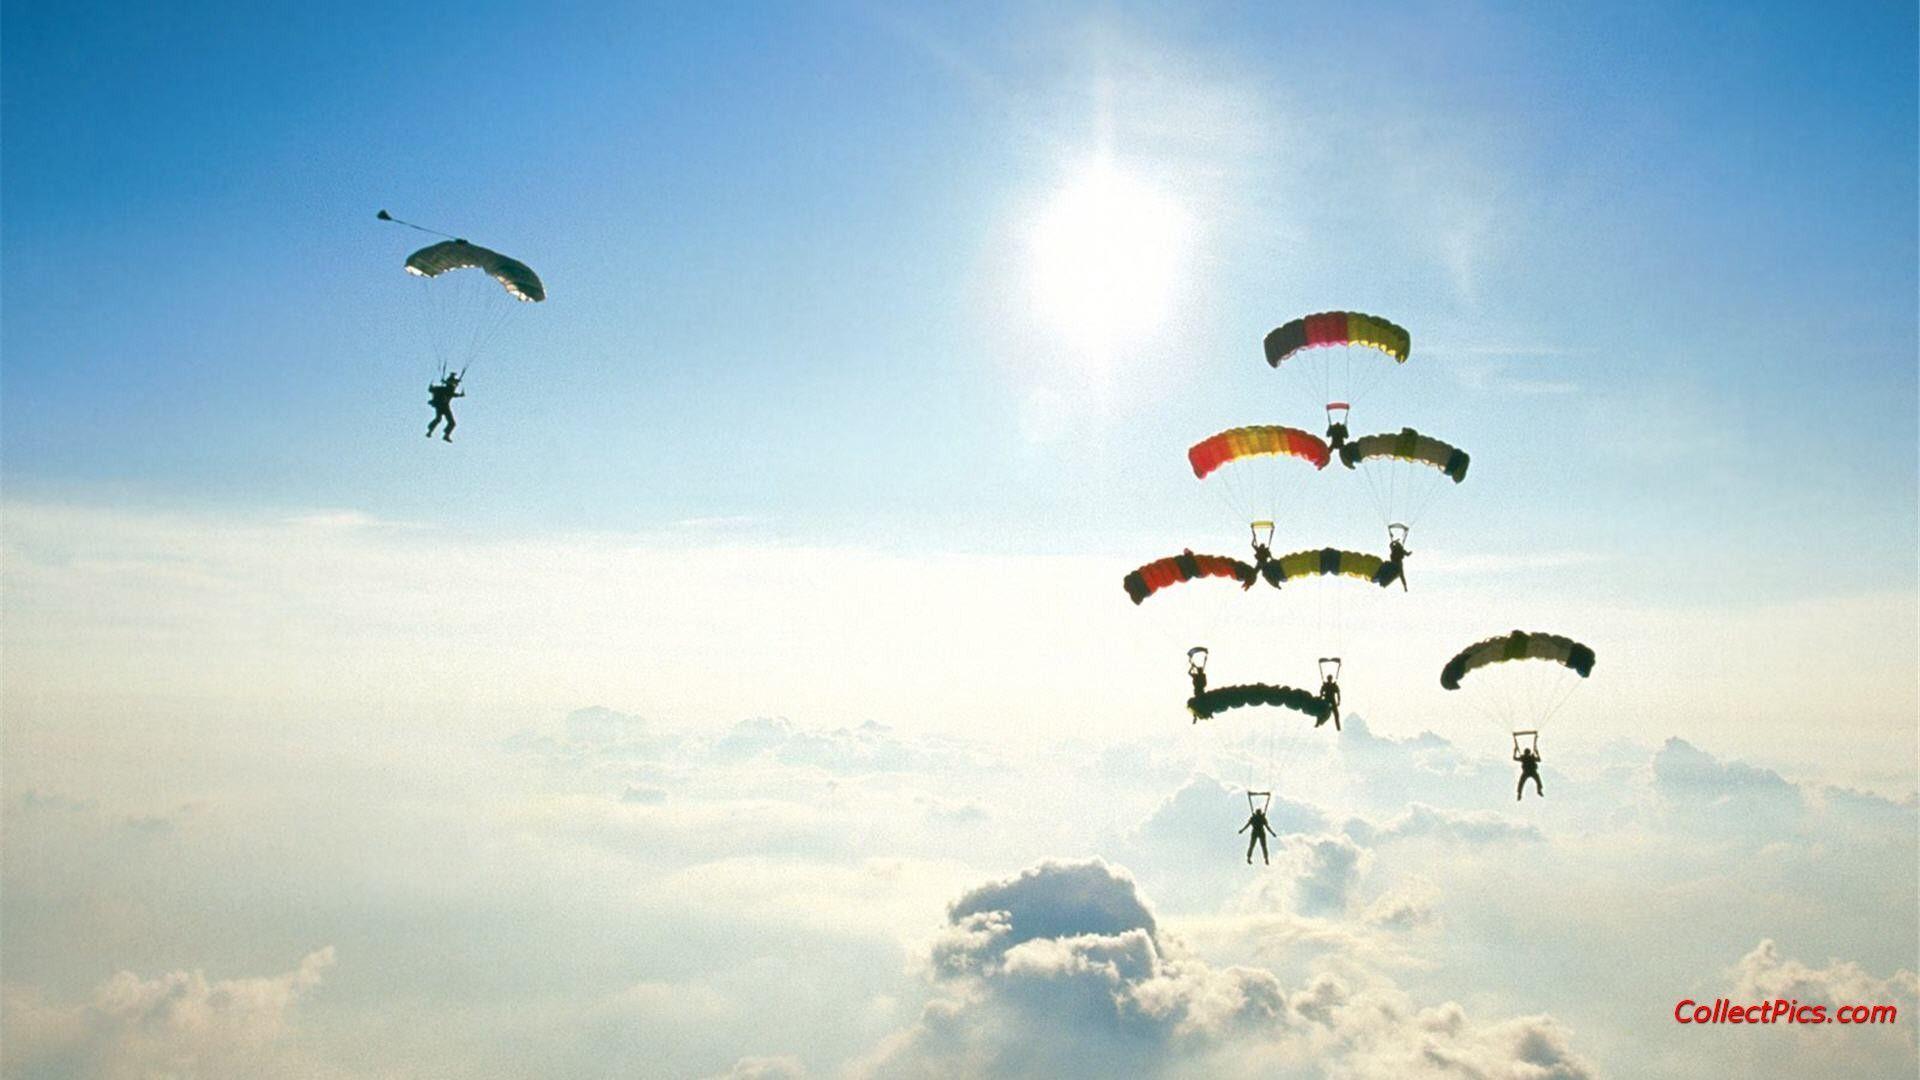 Parachute Skydiving 1080p Wallpaper HD 1920x1080